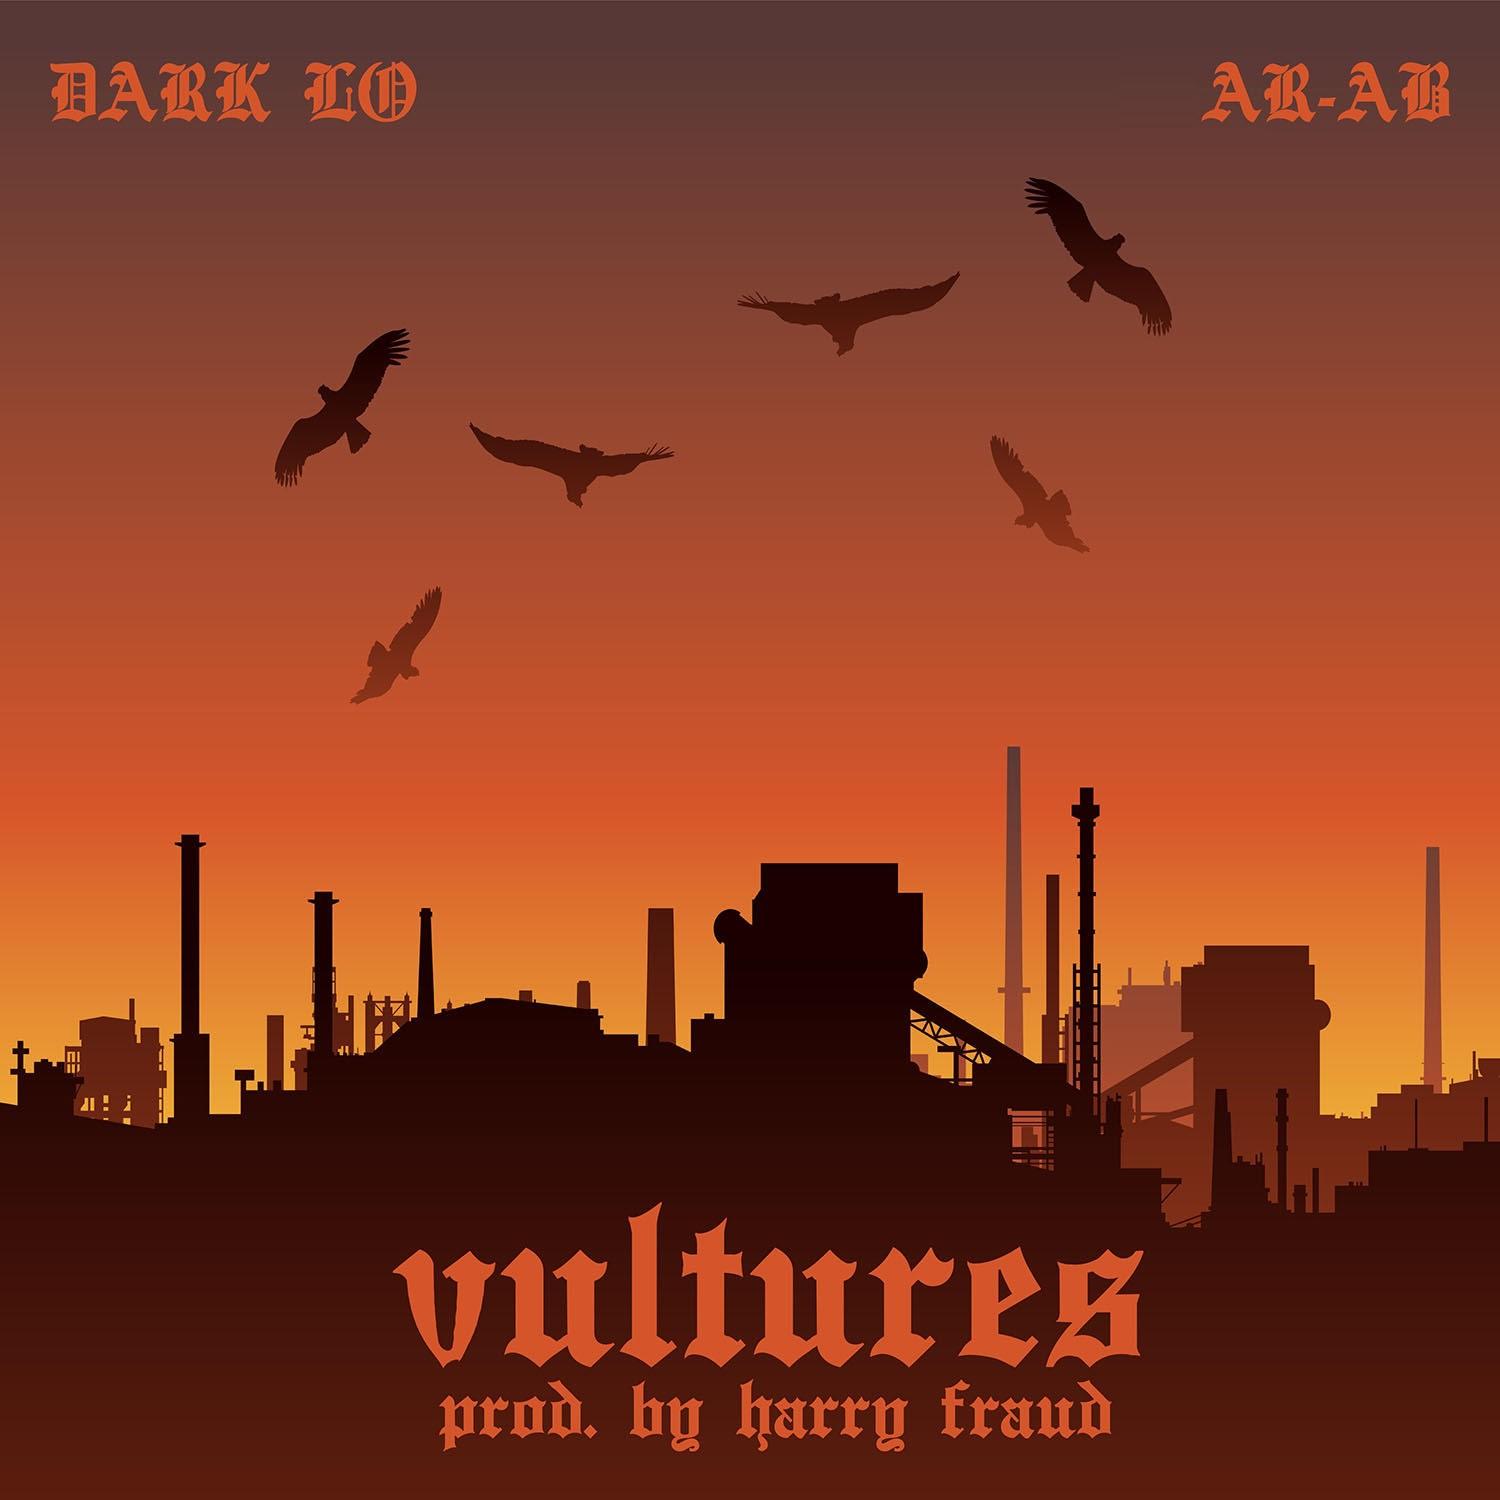 MP3: Dark Lo & Harry Fraud feat. AR-Ab - Vultures